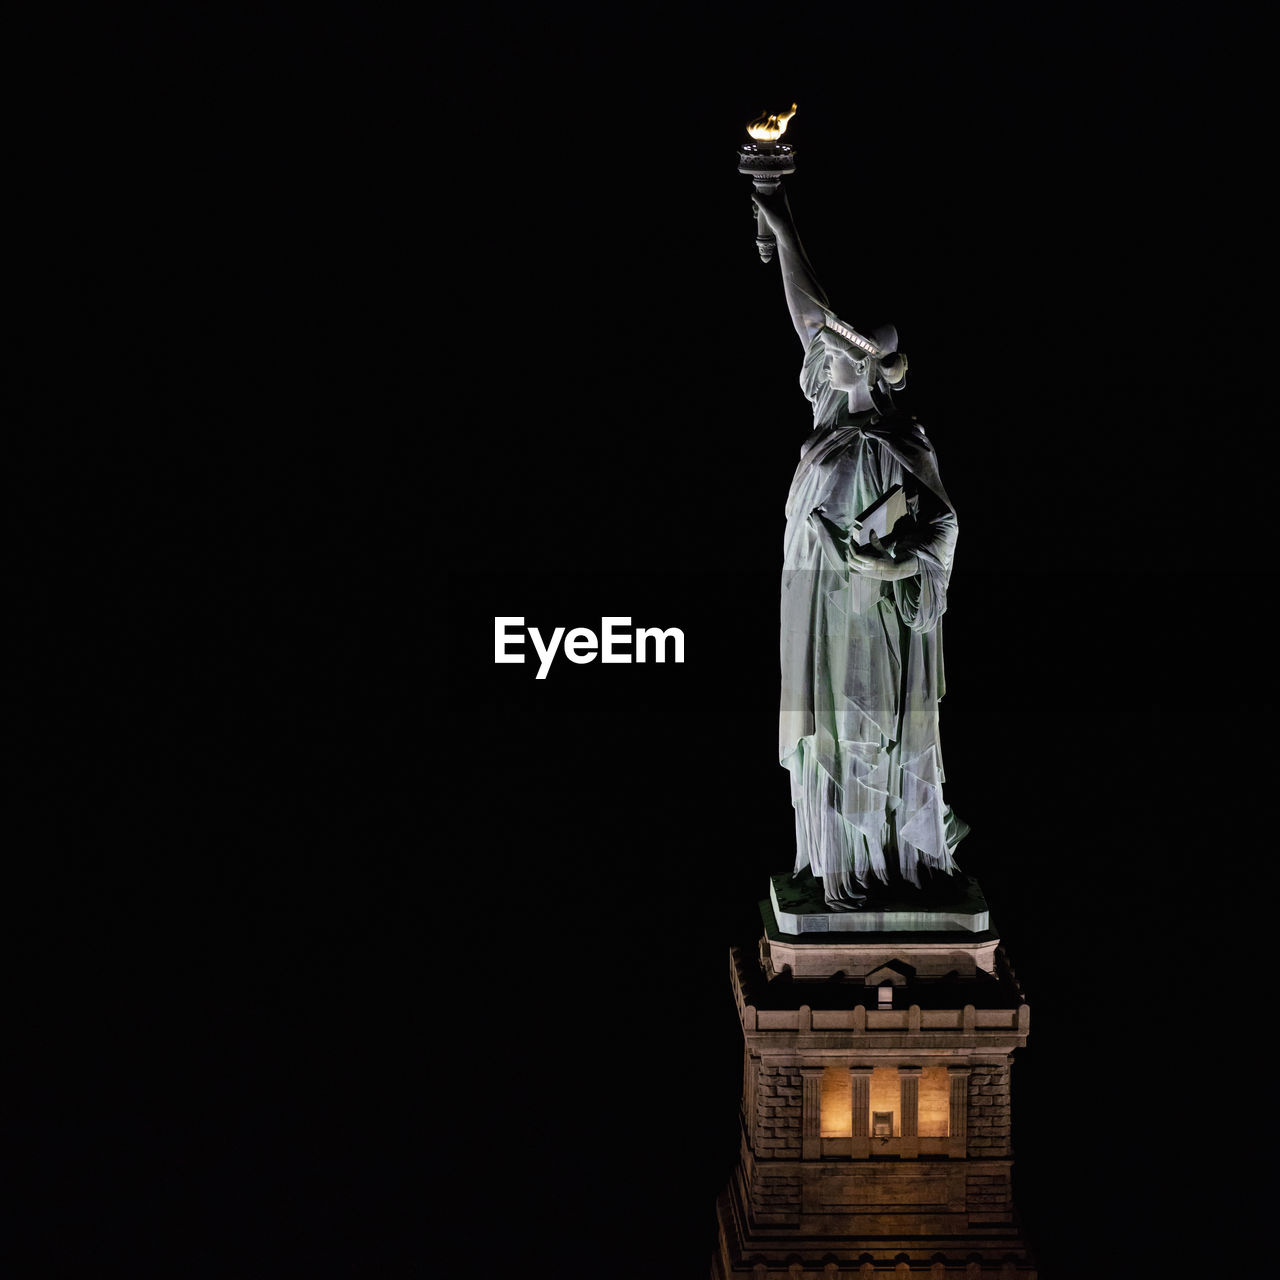 Usa, new york, new york city, statue of liberty illuminated at night